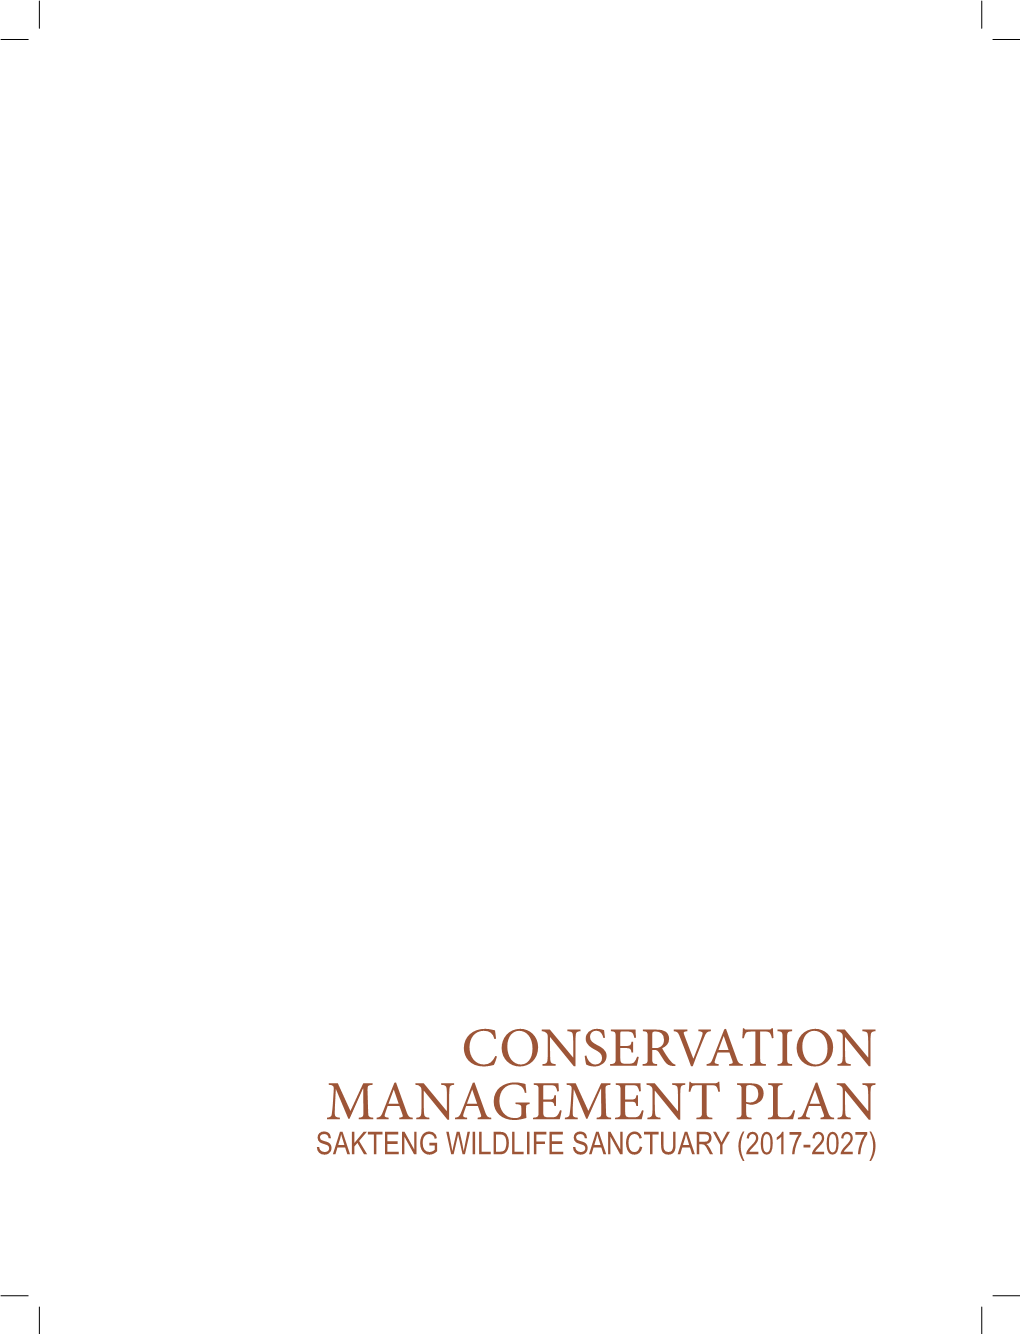 Management Plan Sakteng Wildlife Sanctuary (2017-2027) Prepared and Compiled By: Kesang Dorjee, Sr